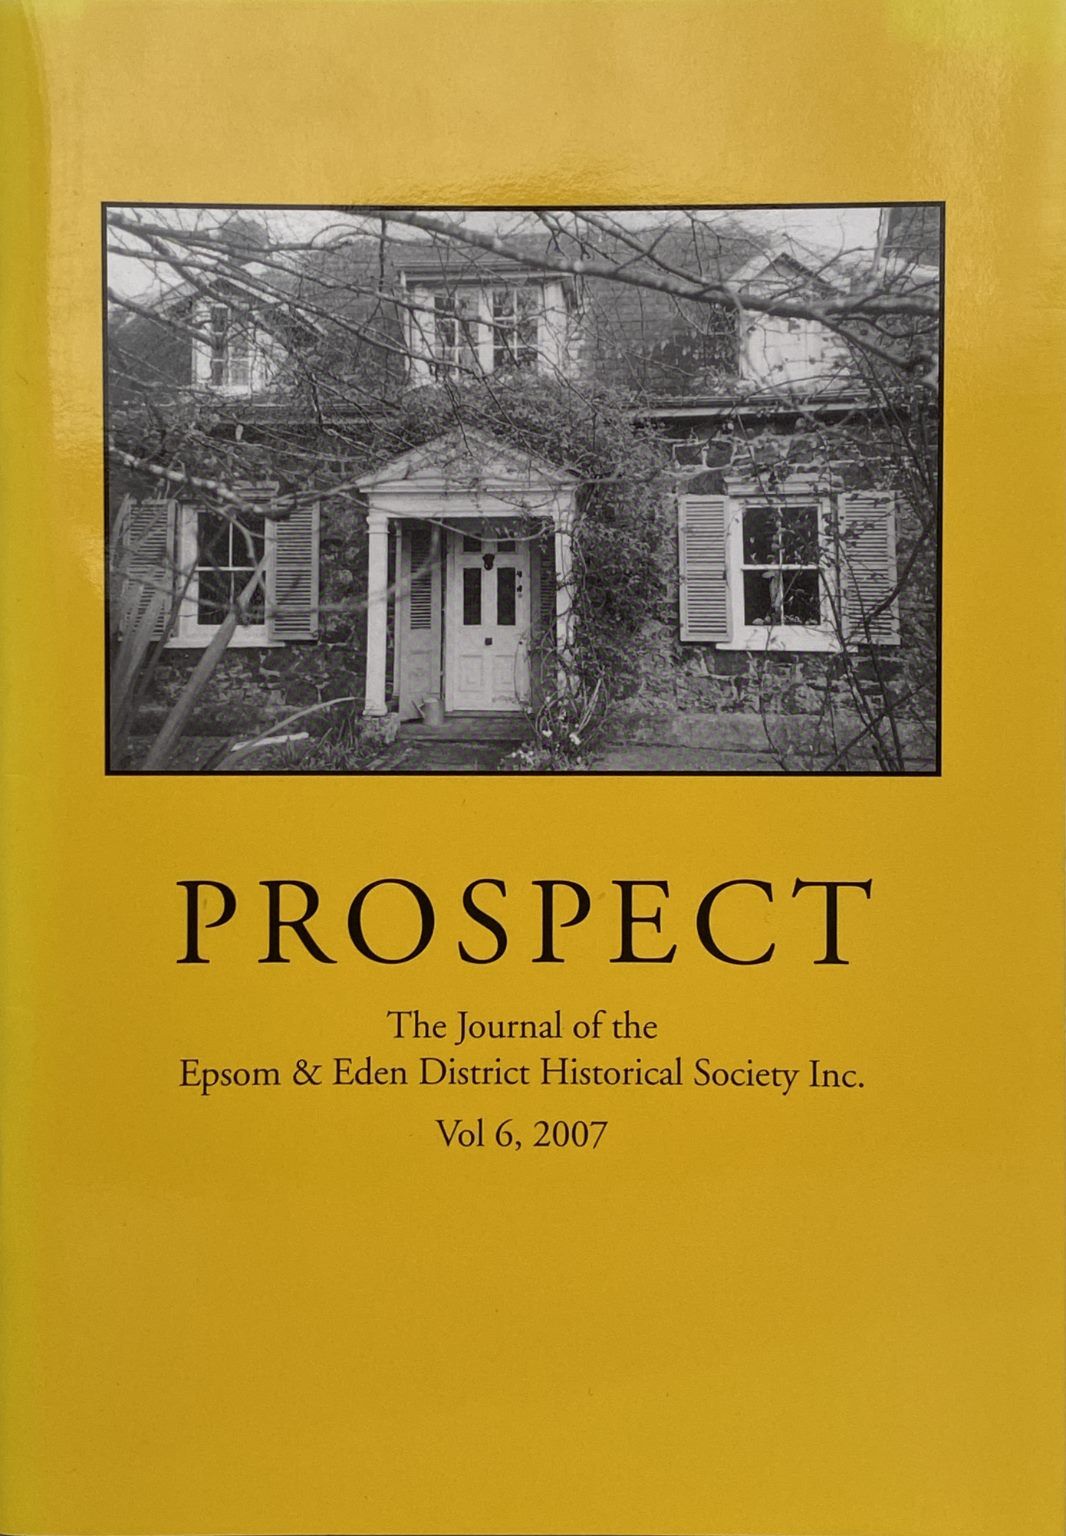 PROSPECT: Journal of the Epsom & Eden District Historical Society - Vol 6, 2007